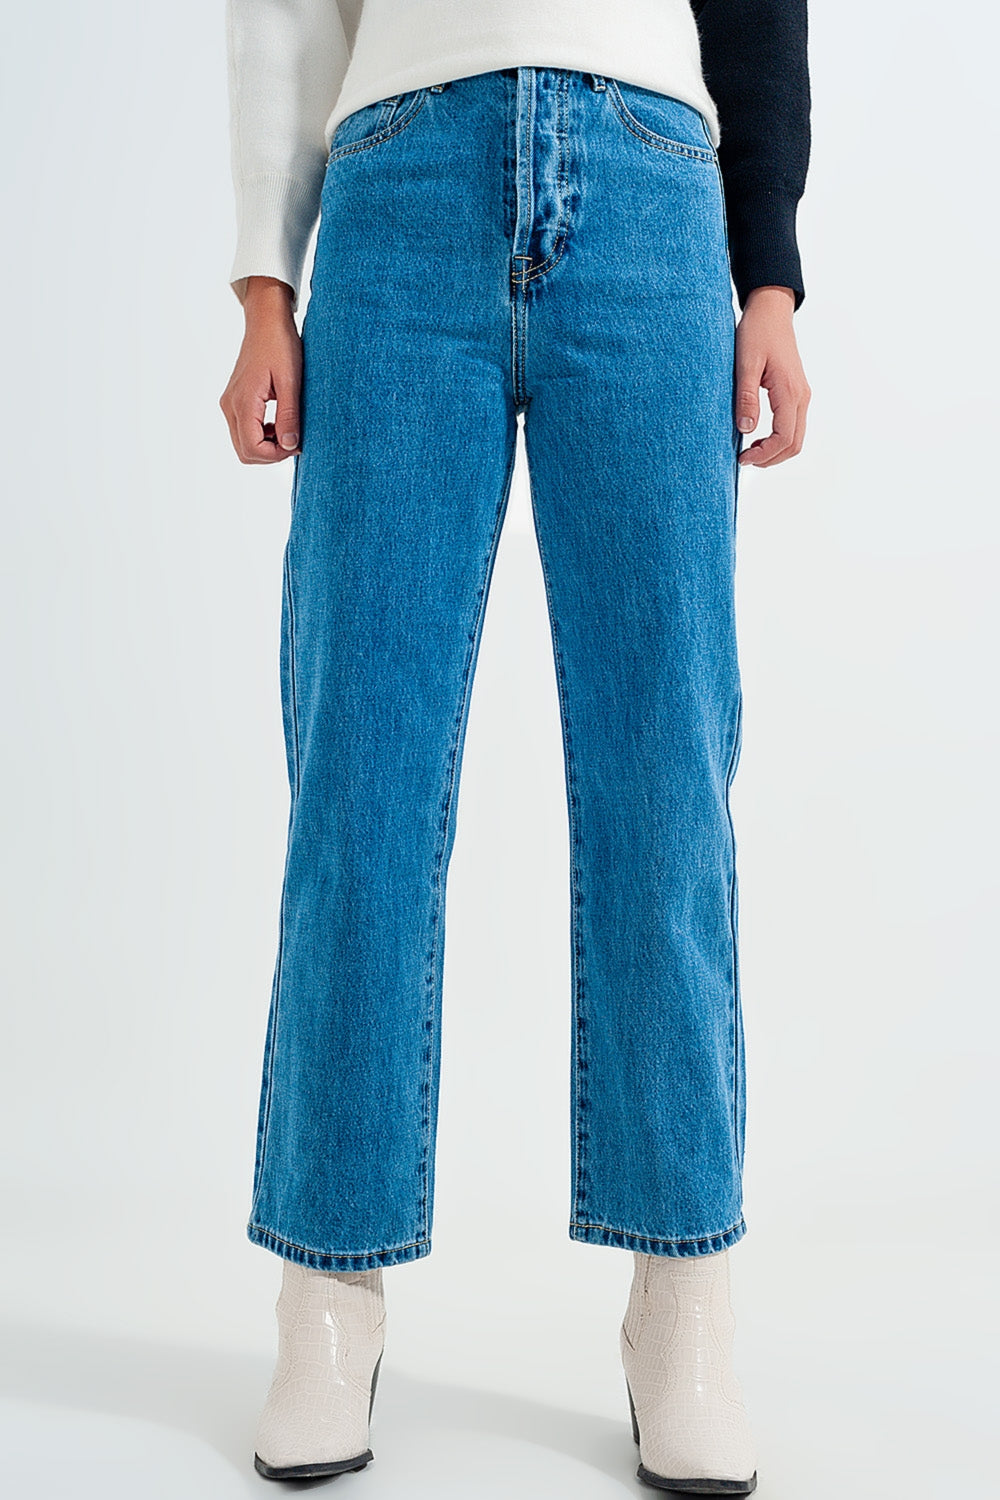 Mom jeans de talle alto en azul vintage